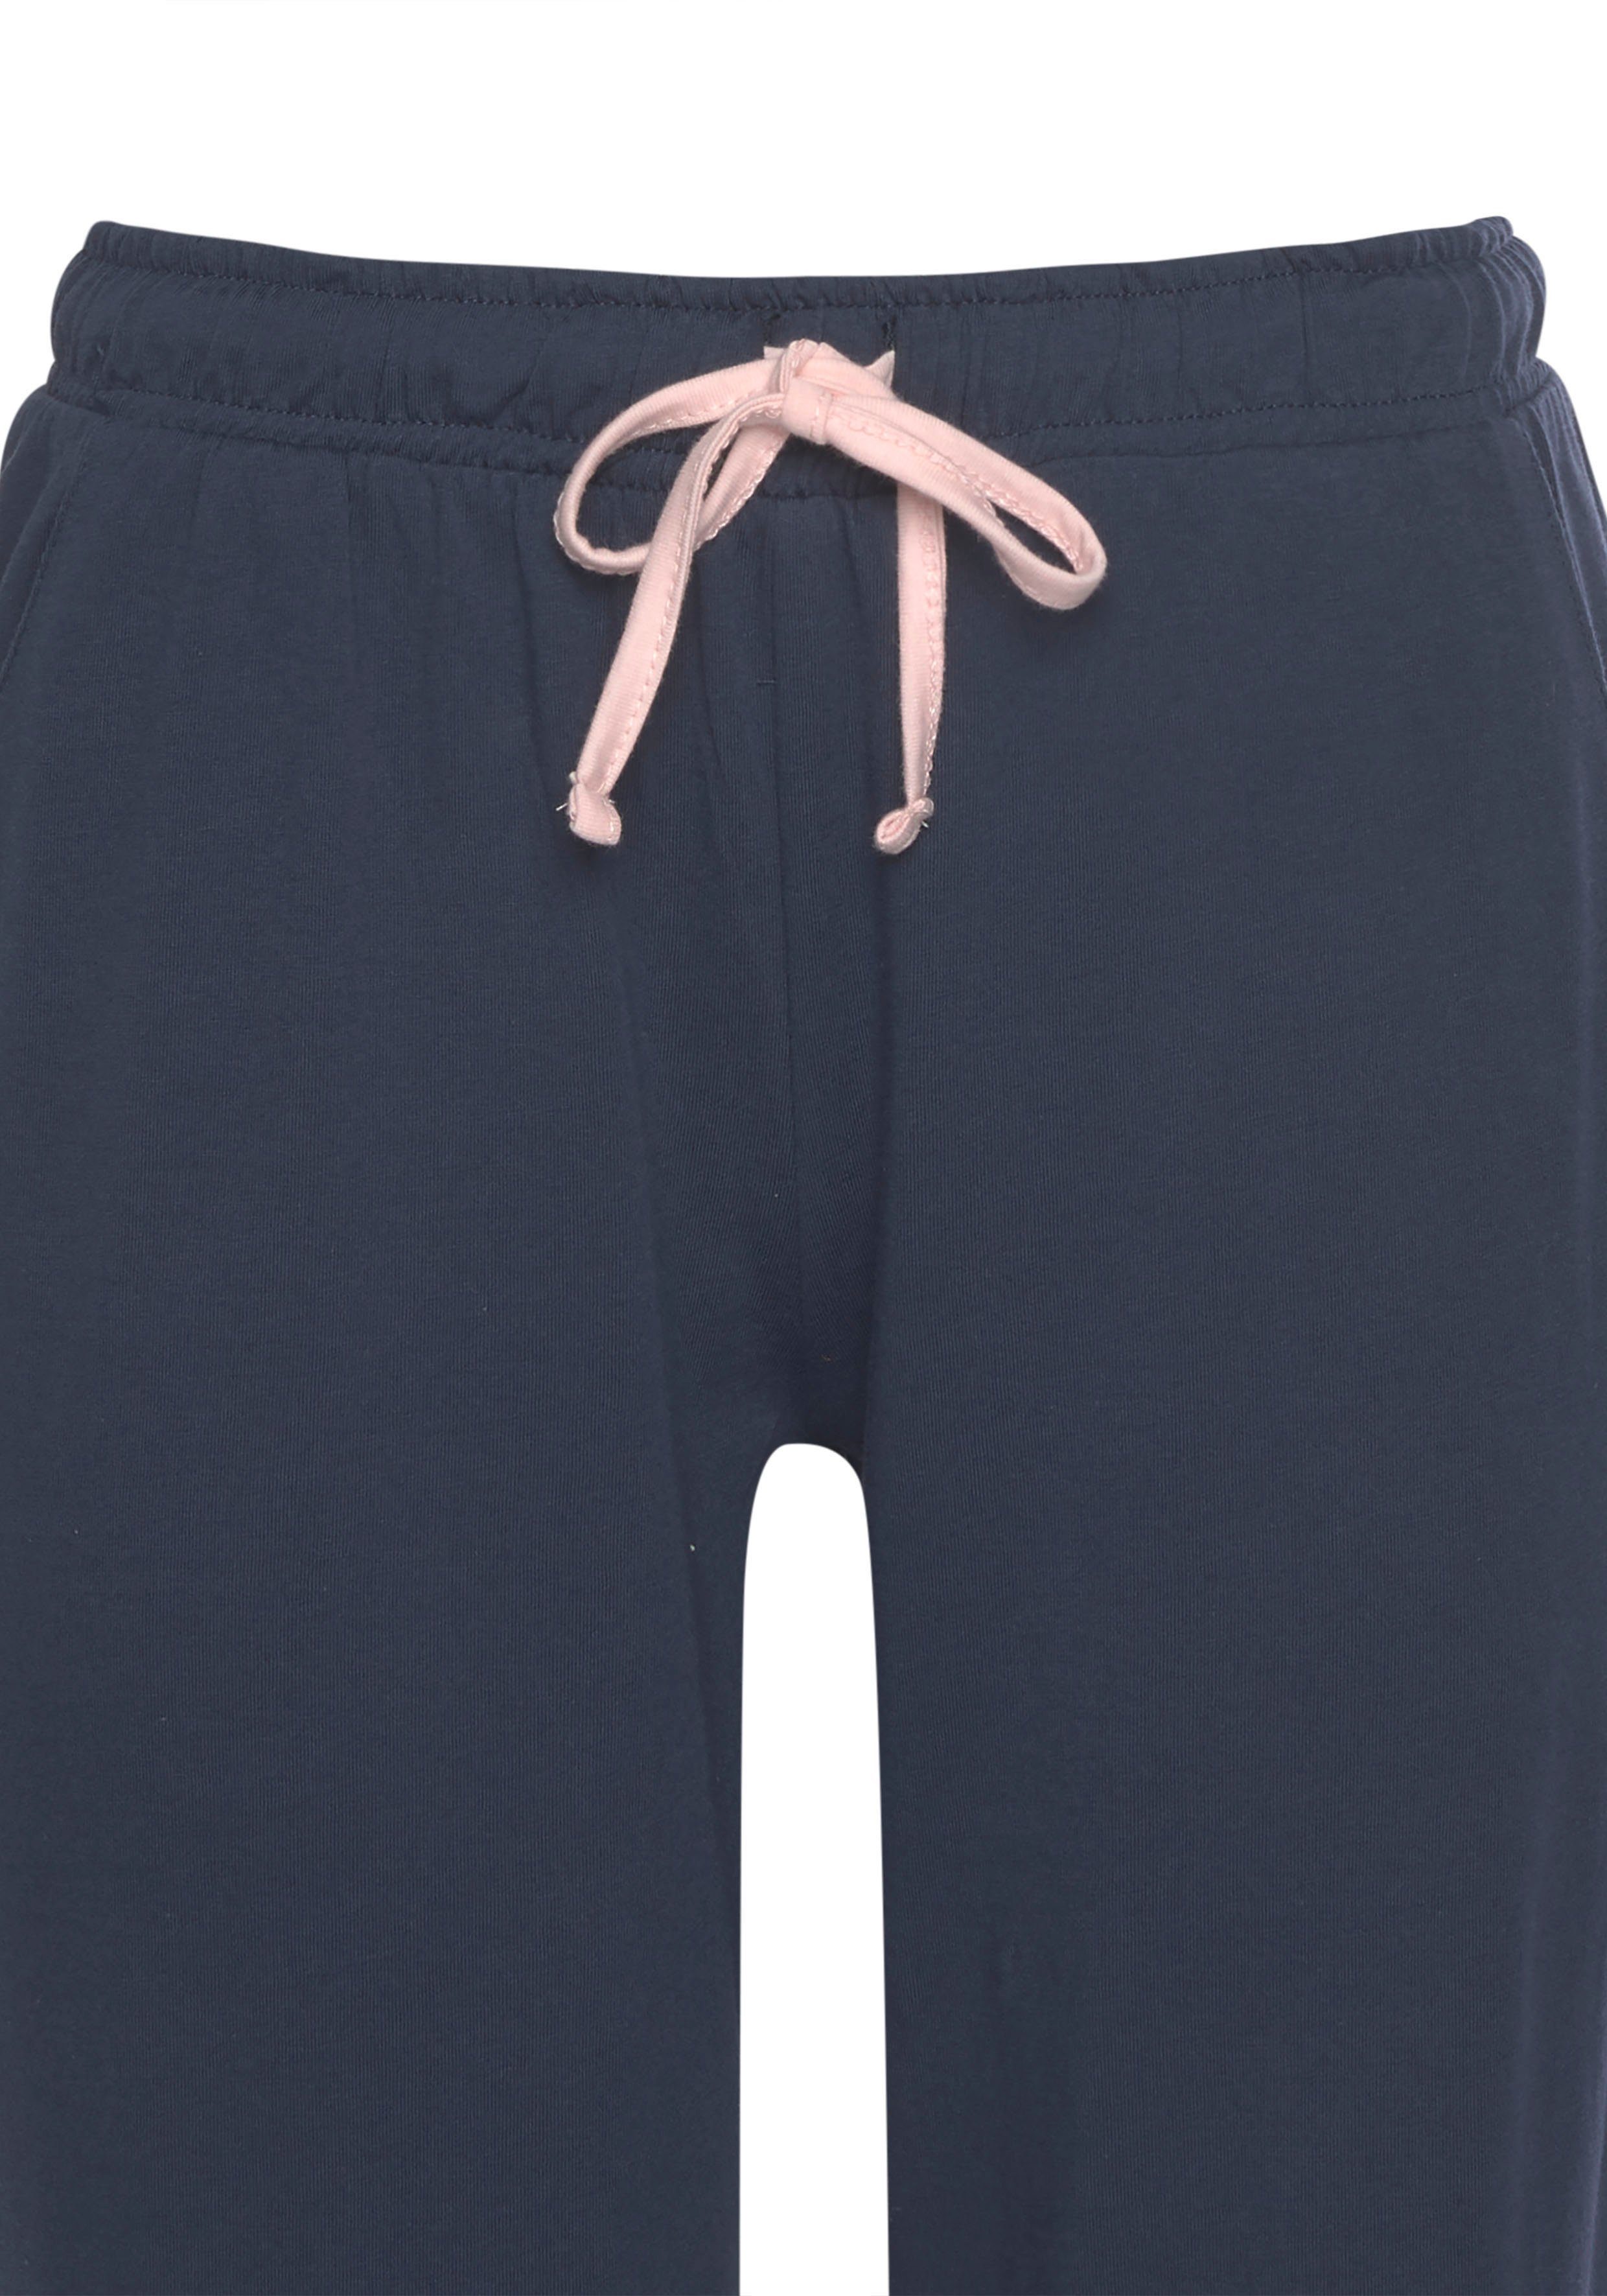 KangaROOS mit Stück) Raglanärmeln rosa-dunkelblau tlg., 1 Pyjama (2 kontrastfarbenen